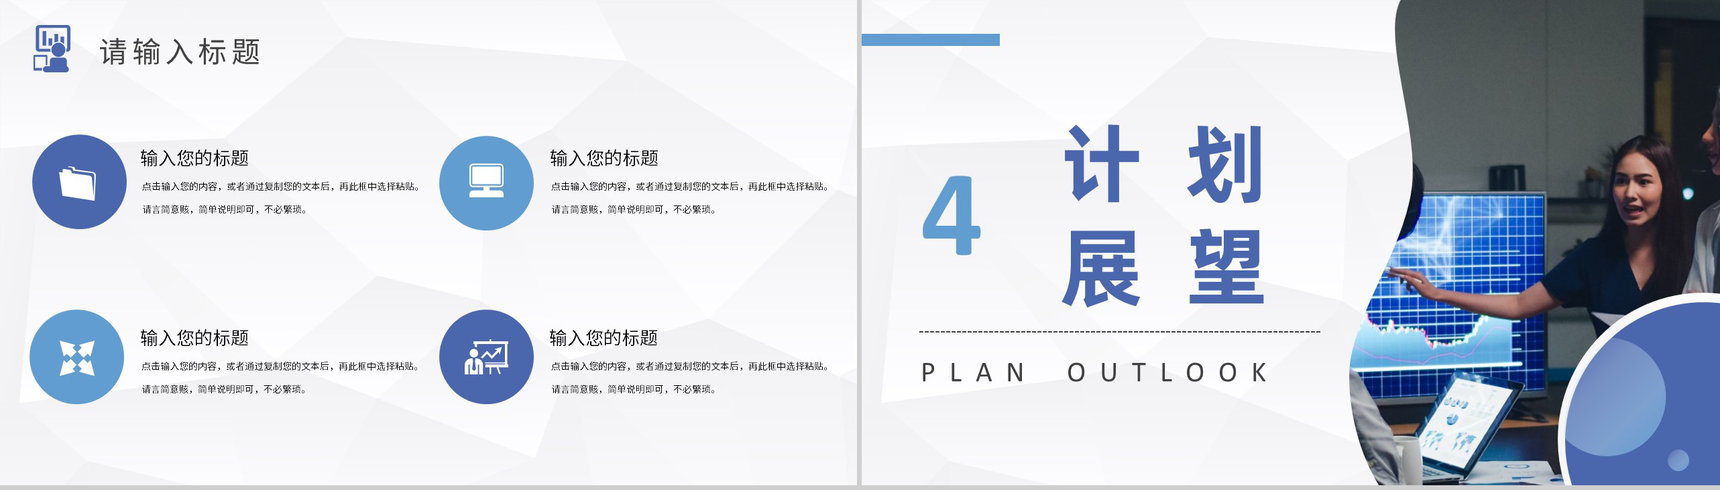 20XX福田工商服务中心工作总结暨新年计划PPT模板-8